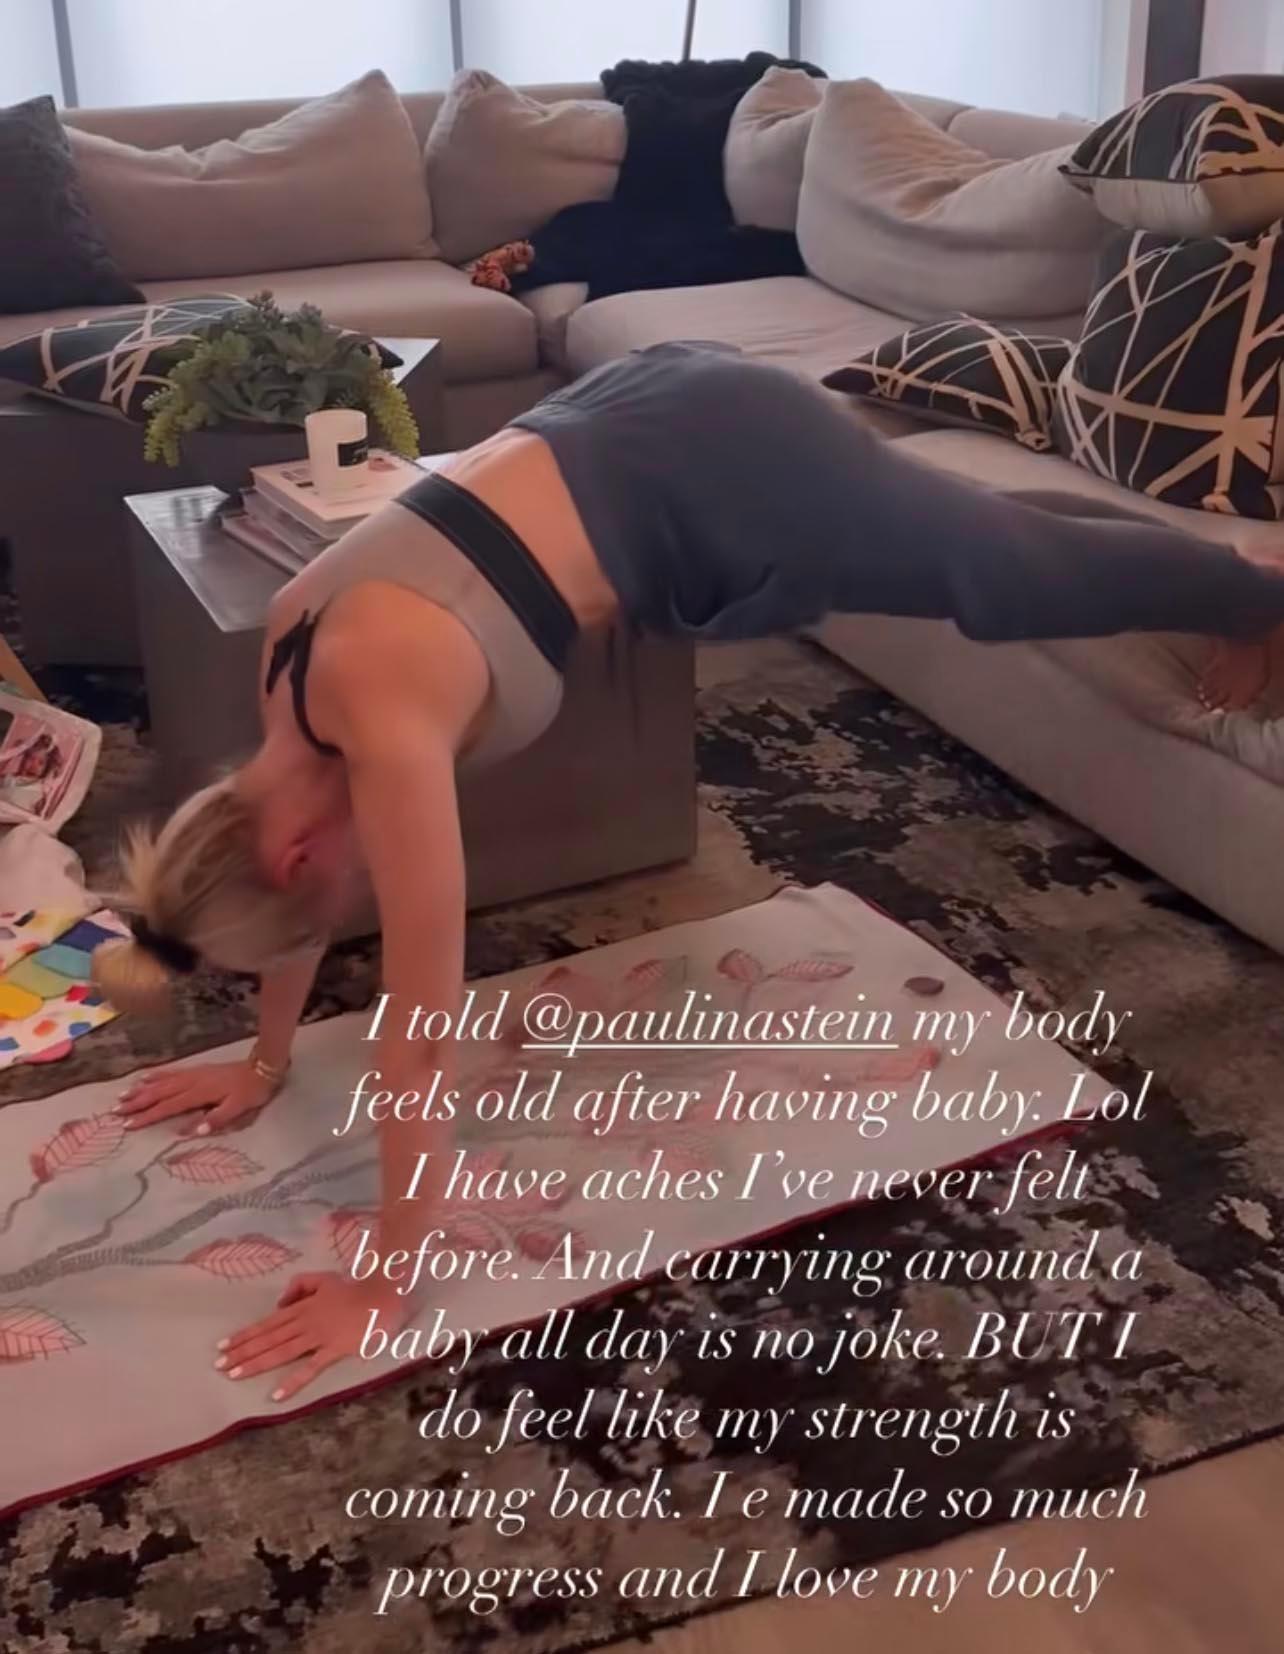 Heather Rae El Moussa Declares 'I Love My Body' As She Makes Postpartum Progress